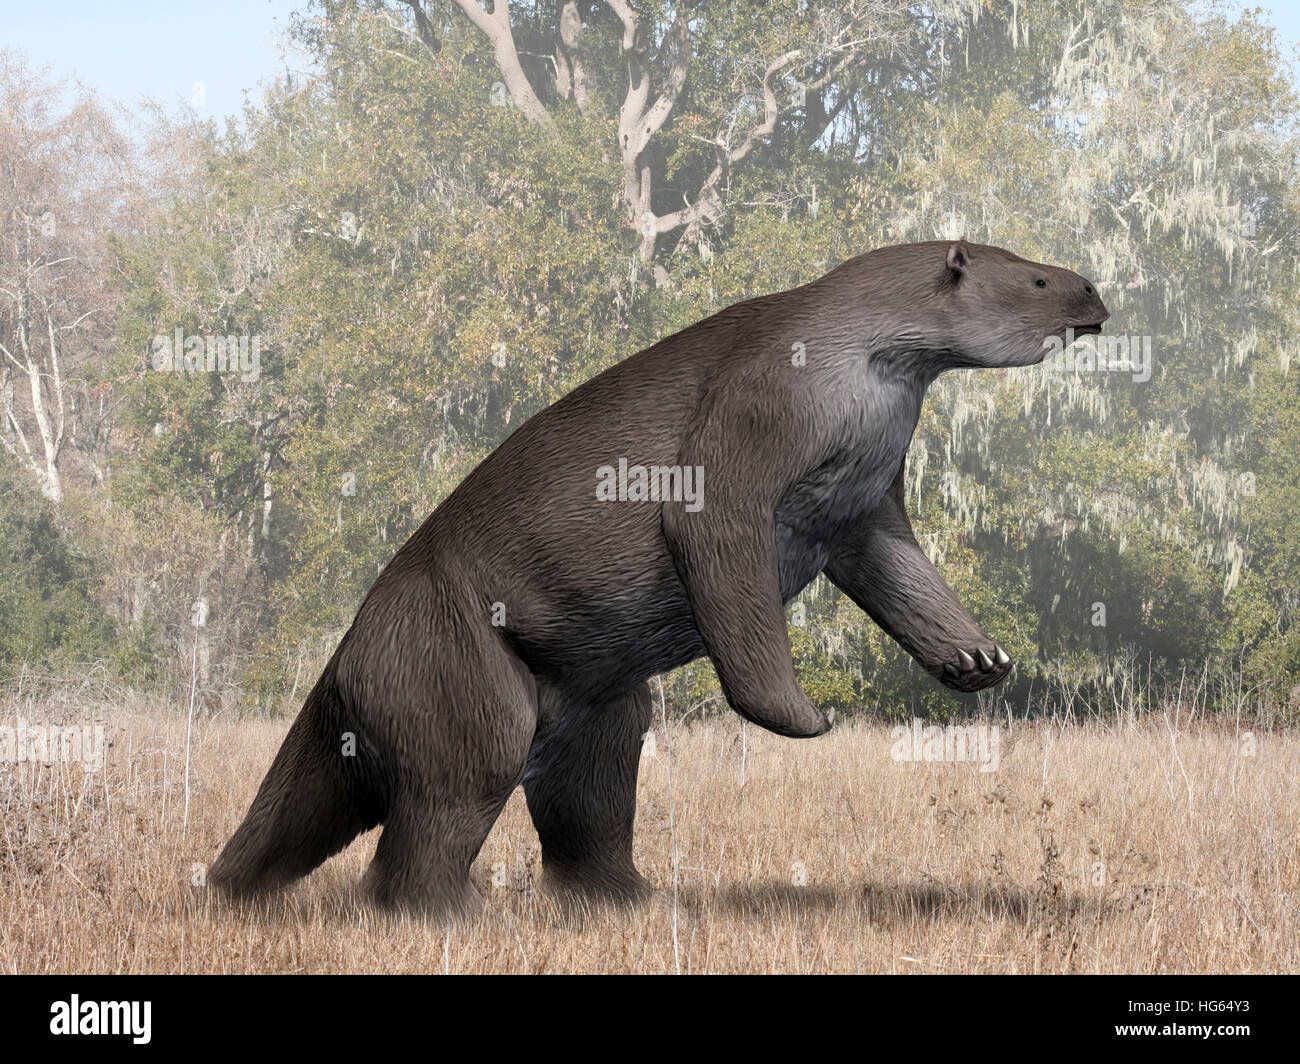 Pleistocene animals hi-res stock photography and images - Alamy